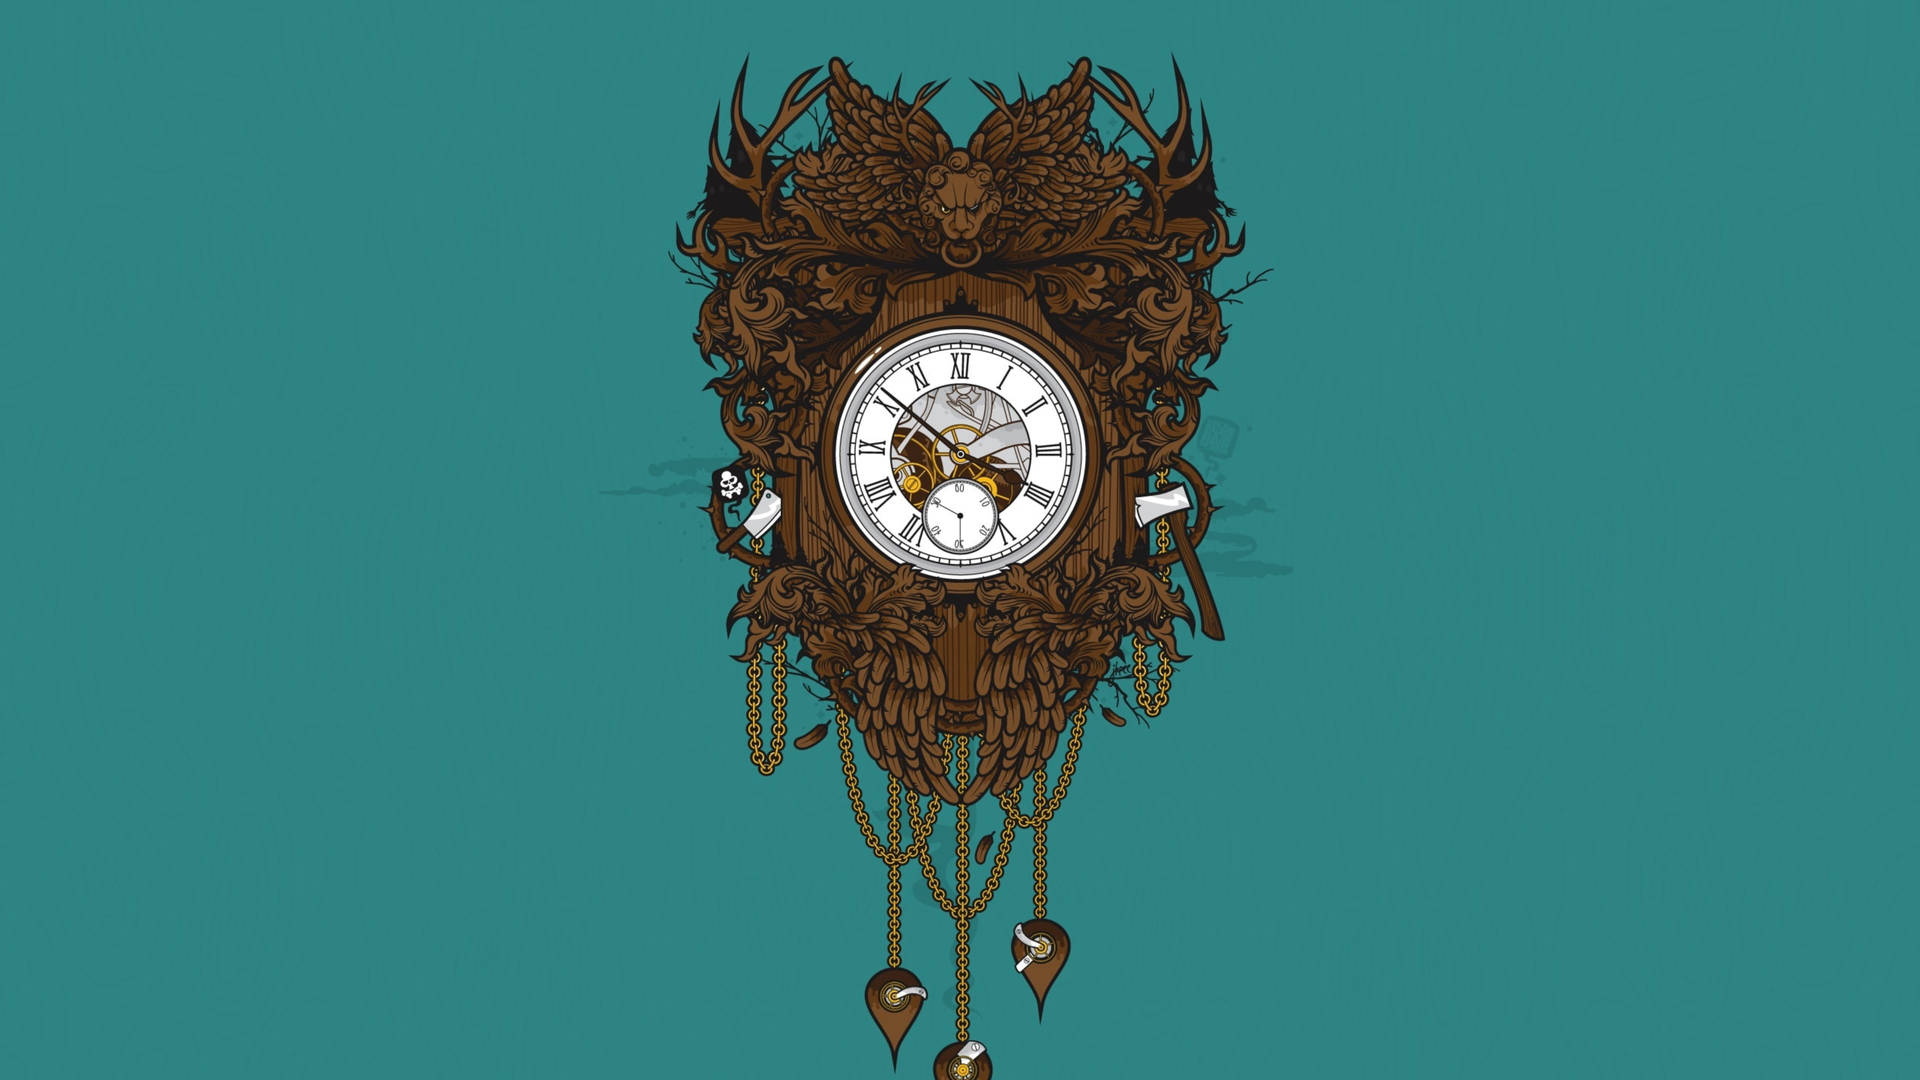 Victorian Decorative Wall Clock Background